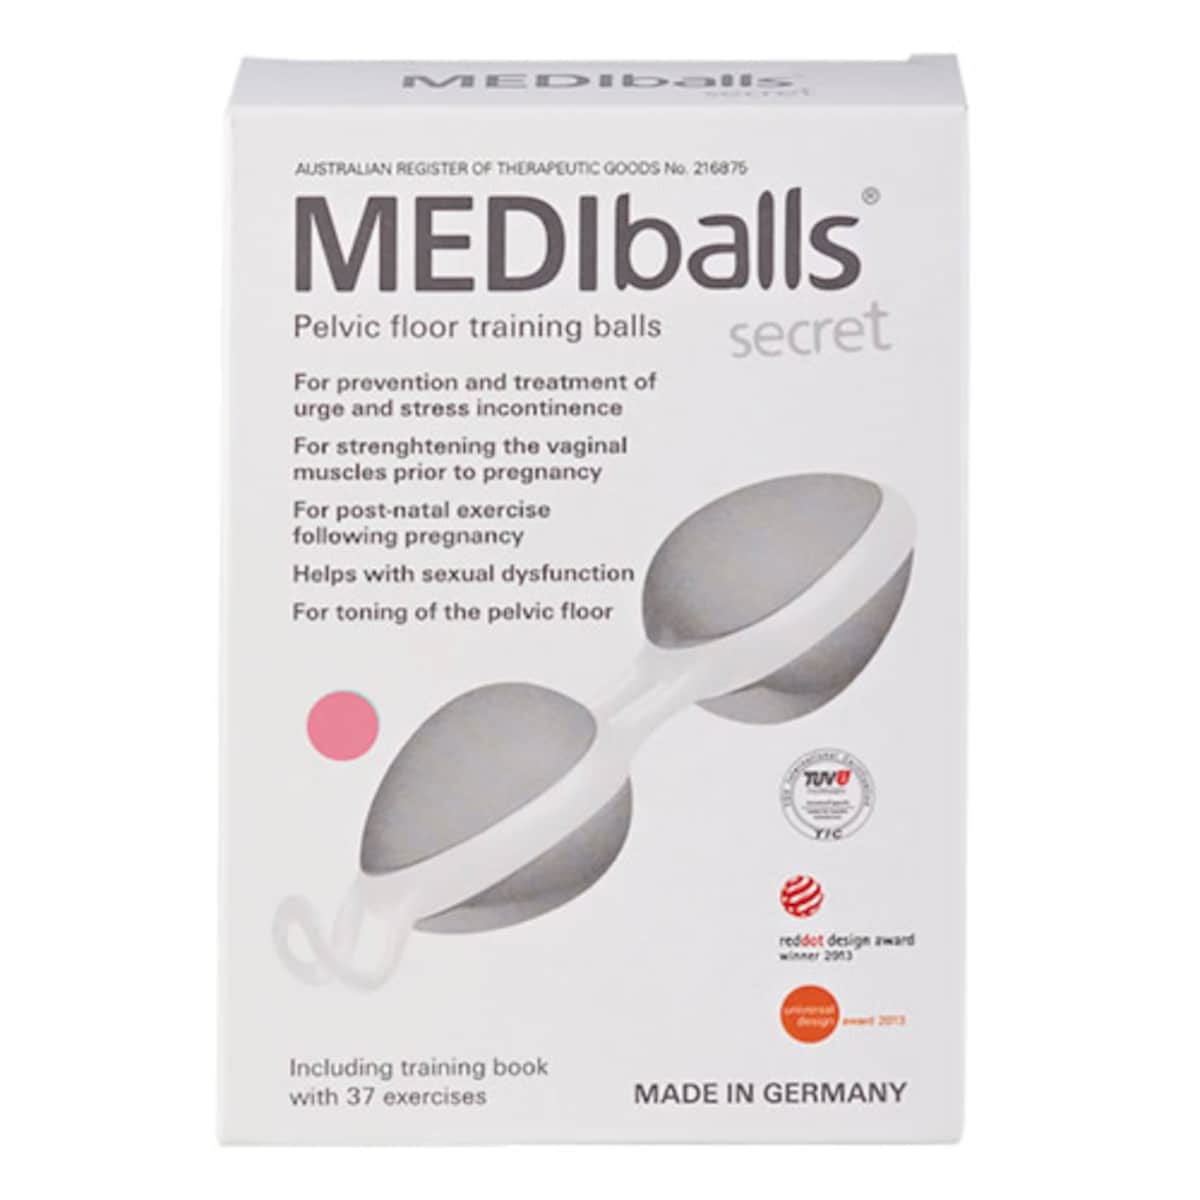 Pelvi Mediballs Secret (Pelvic Floor Training Balls) Double (Colours Selected At Random)